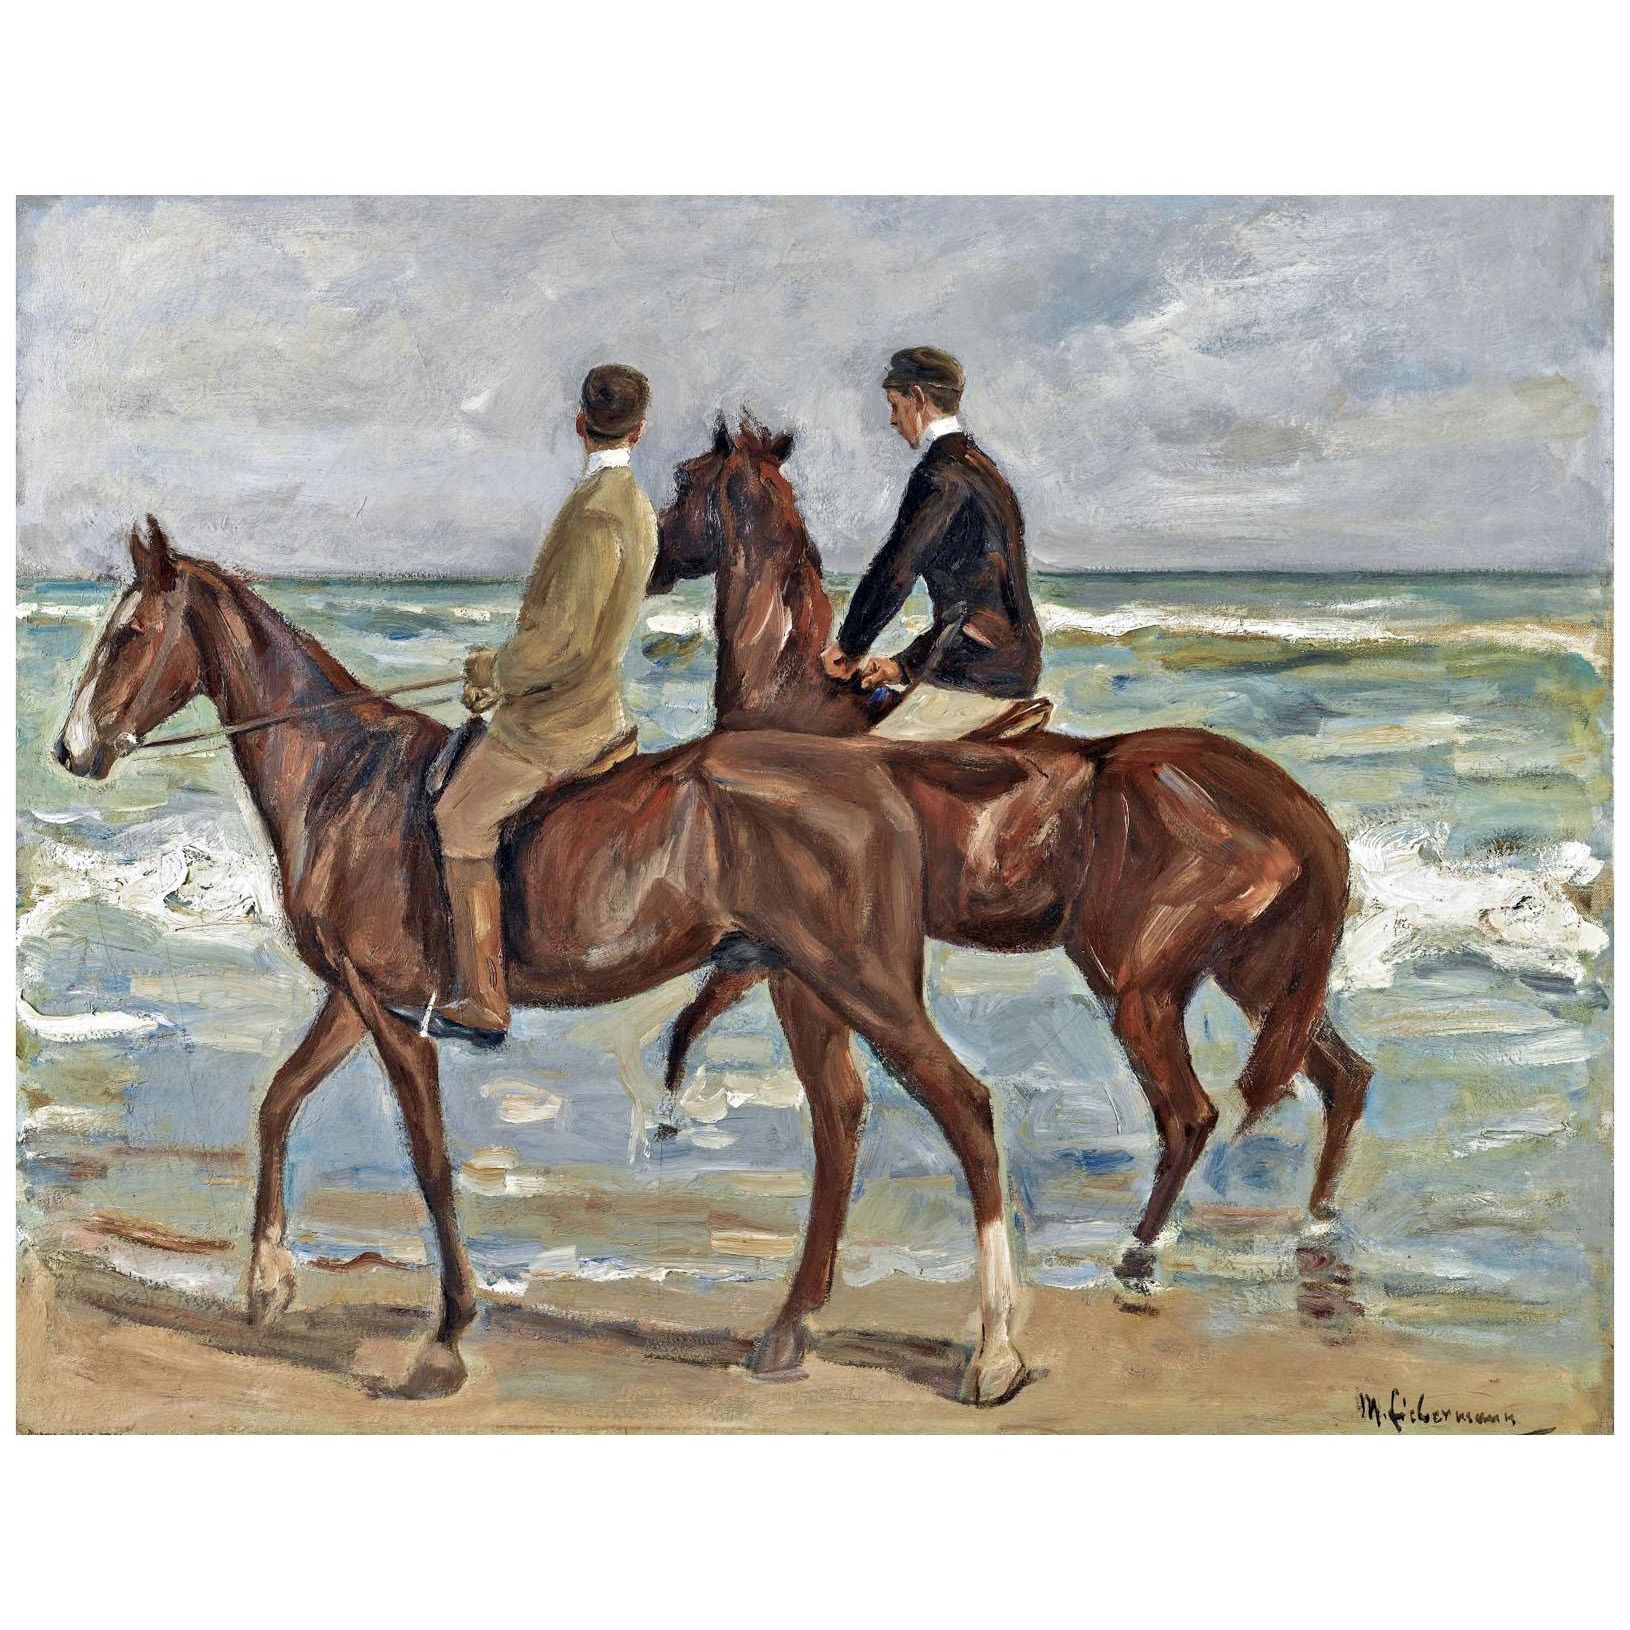 Max Libermann. Zwei Reiter am Strand. 1901. Private collection